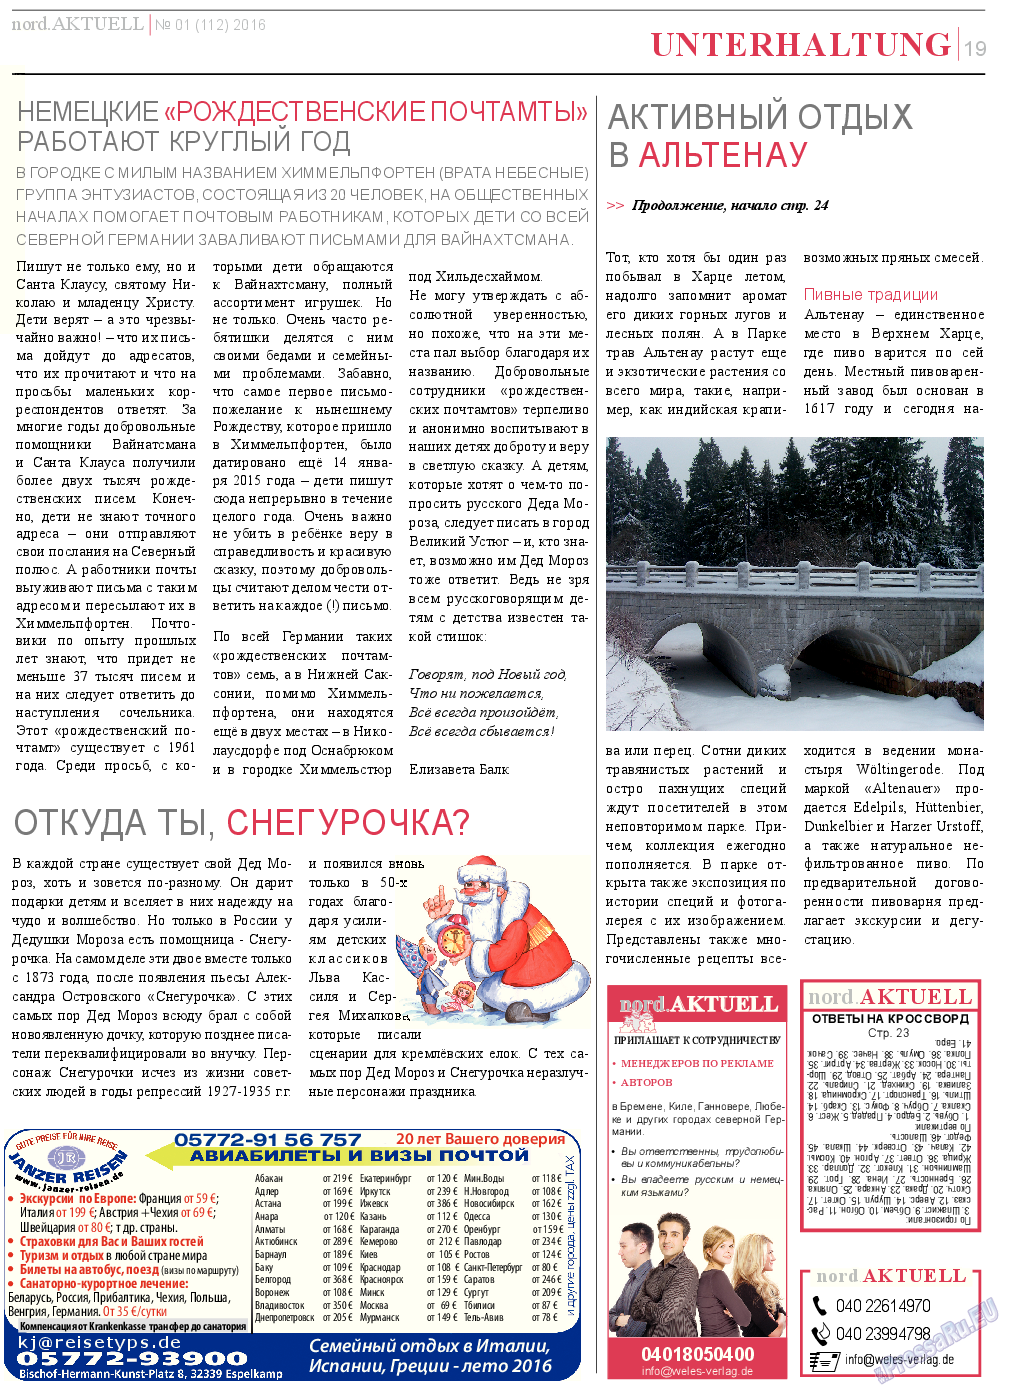 nord.Aktuell, газета. 2016 №1 стр.19